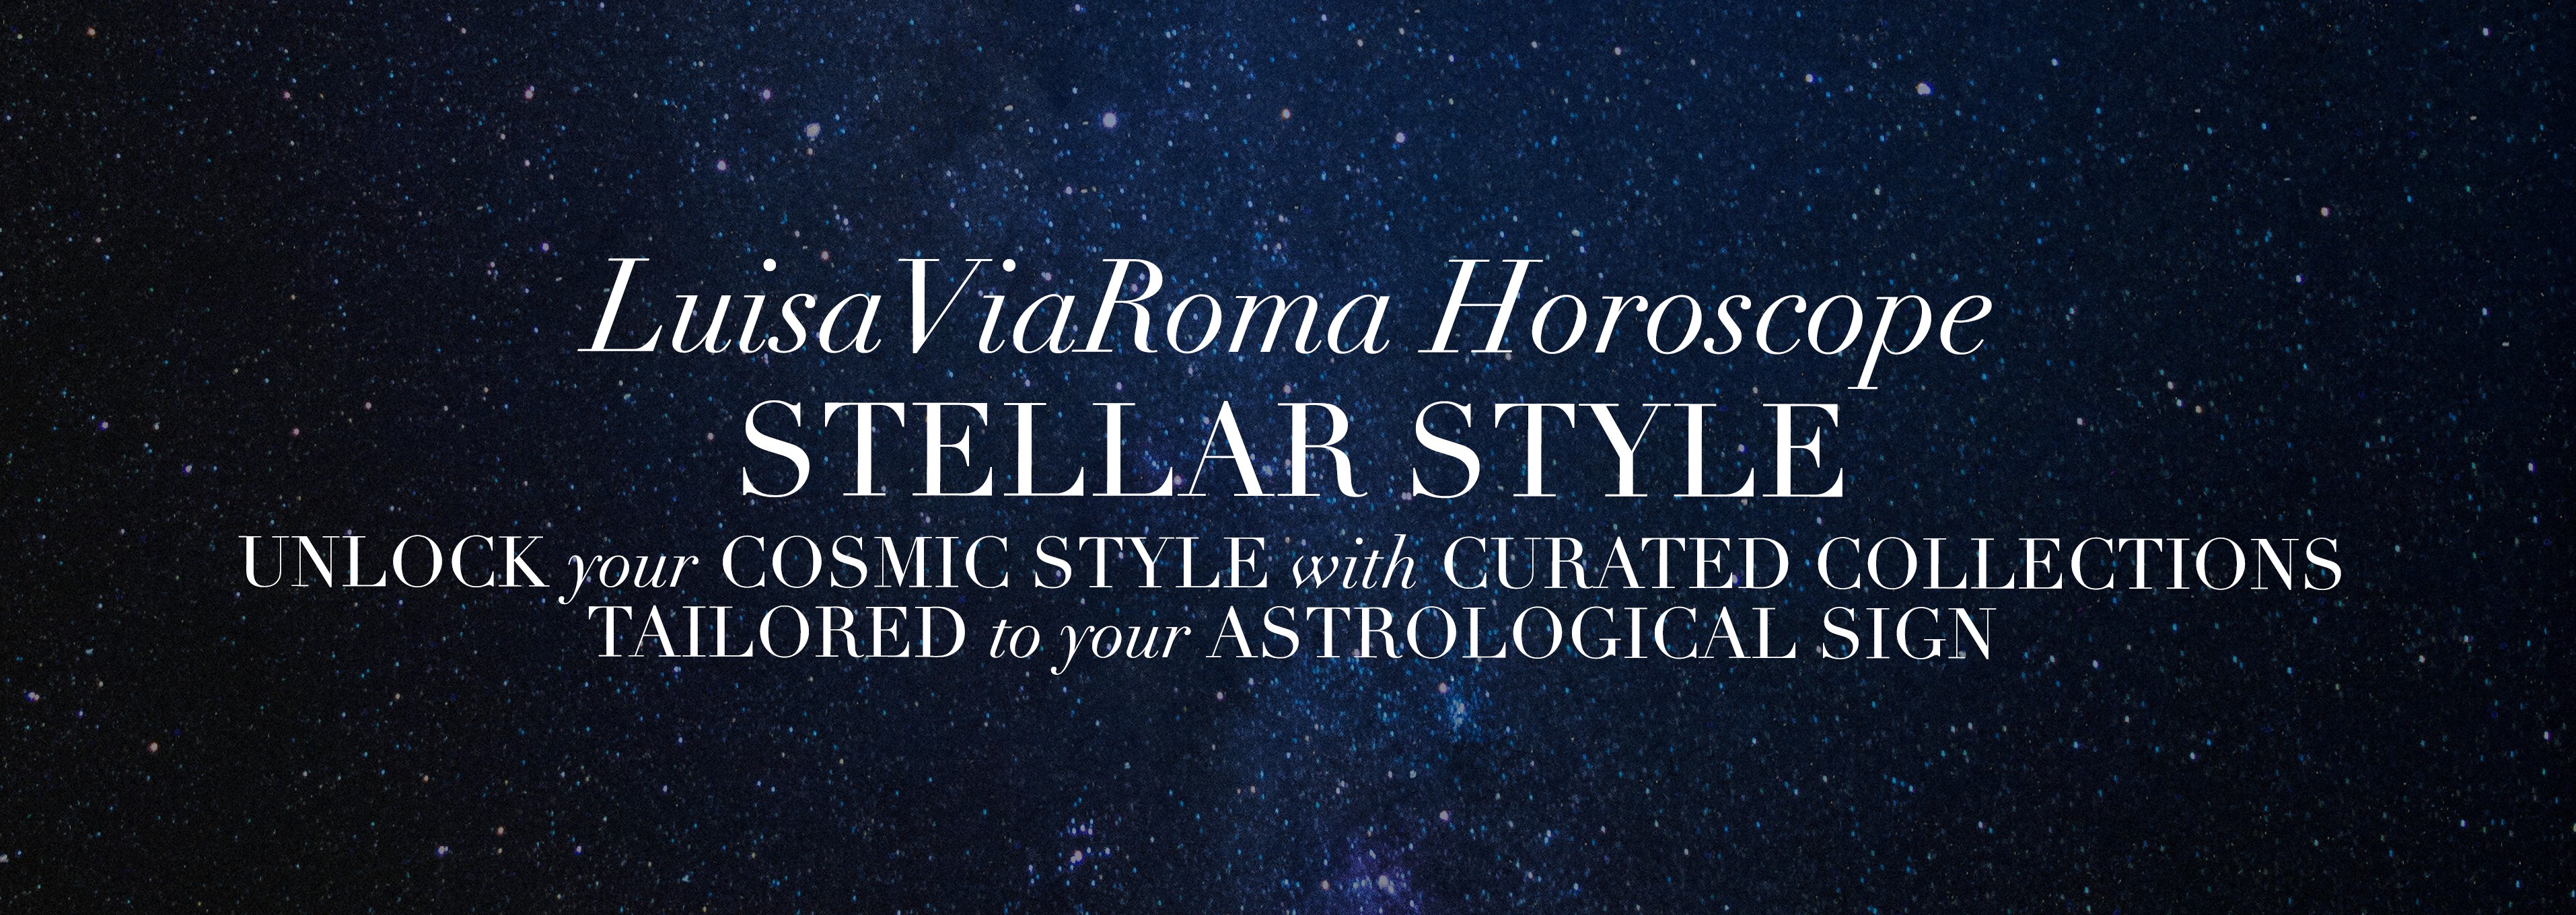 Horoscope de LuisaViaRoma : style stellaire